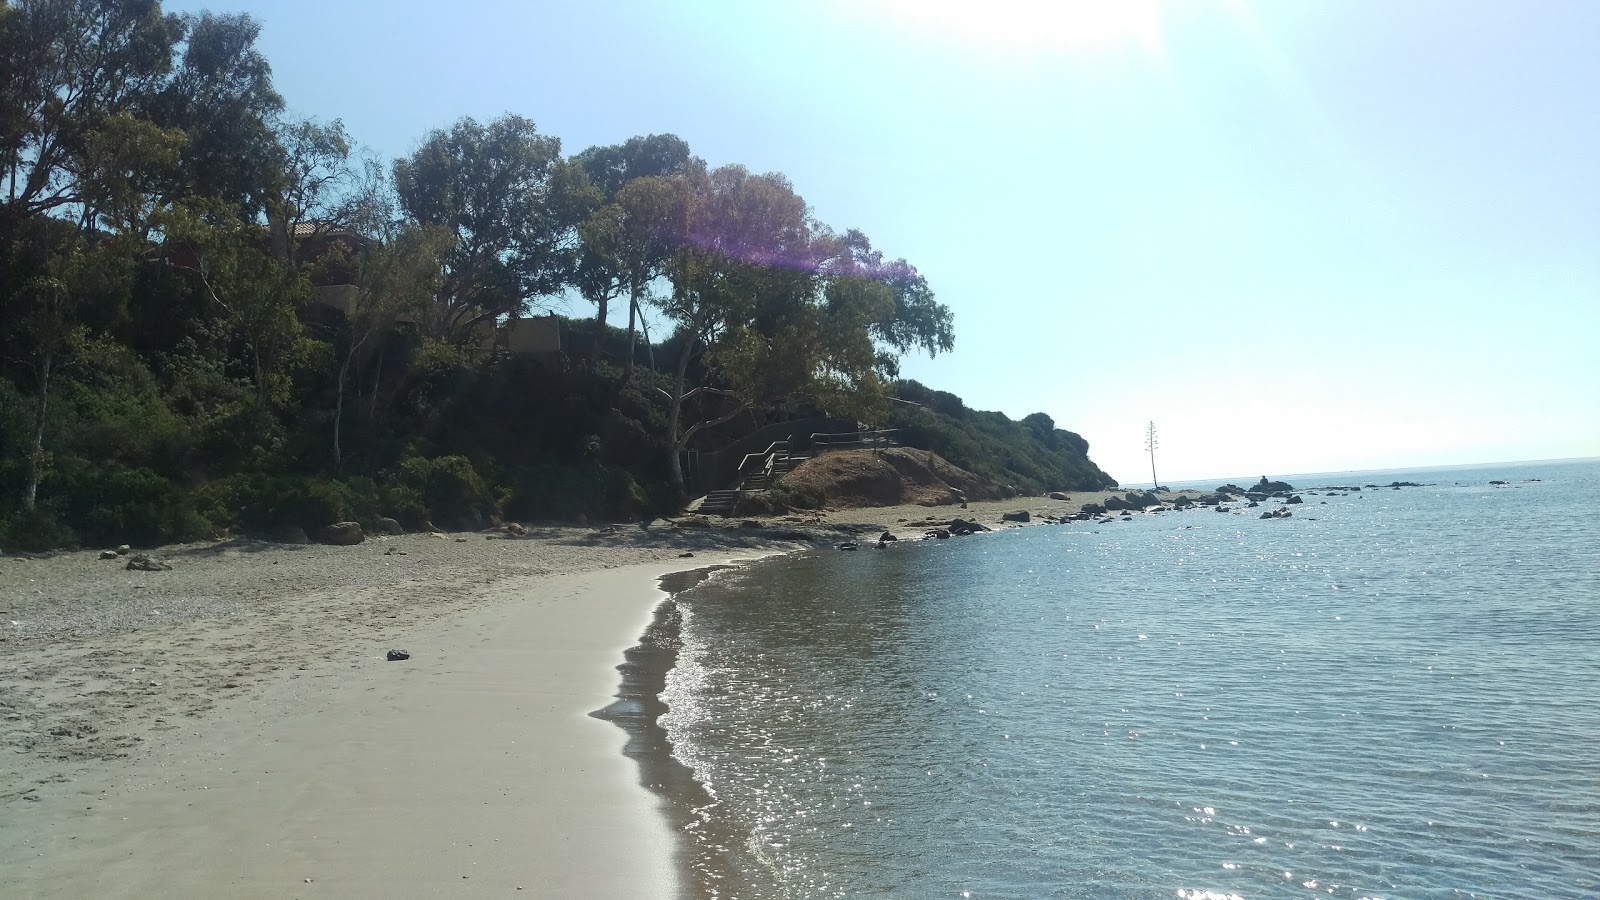 Photo of Playa Limite Cadiz, Malaga with gray sand surface